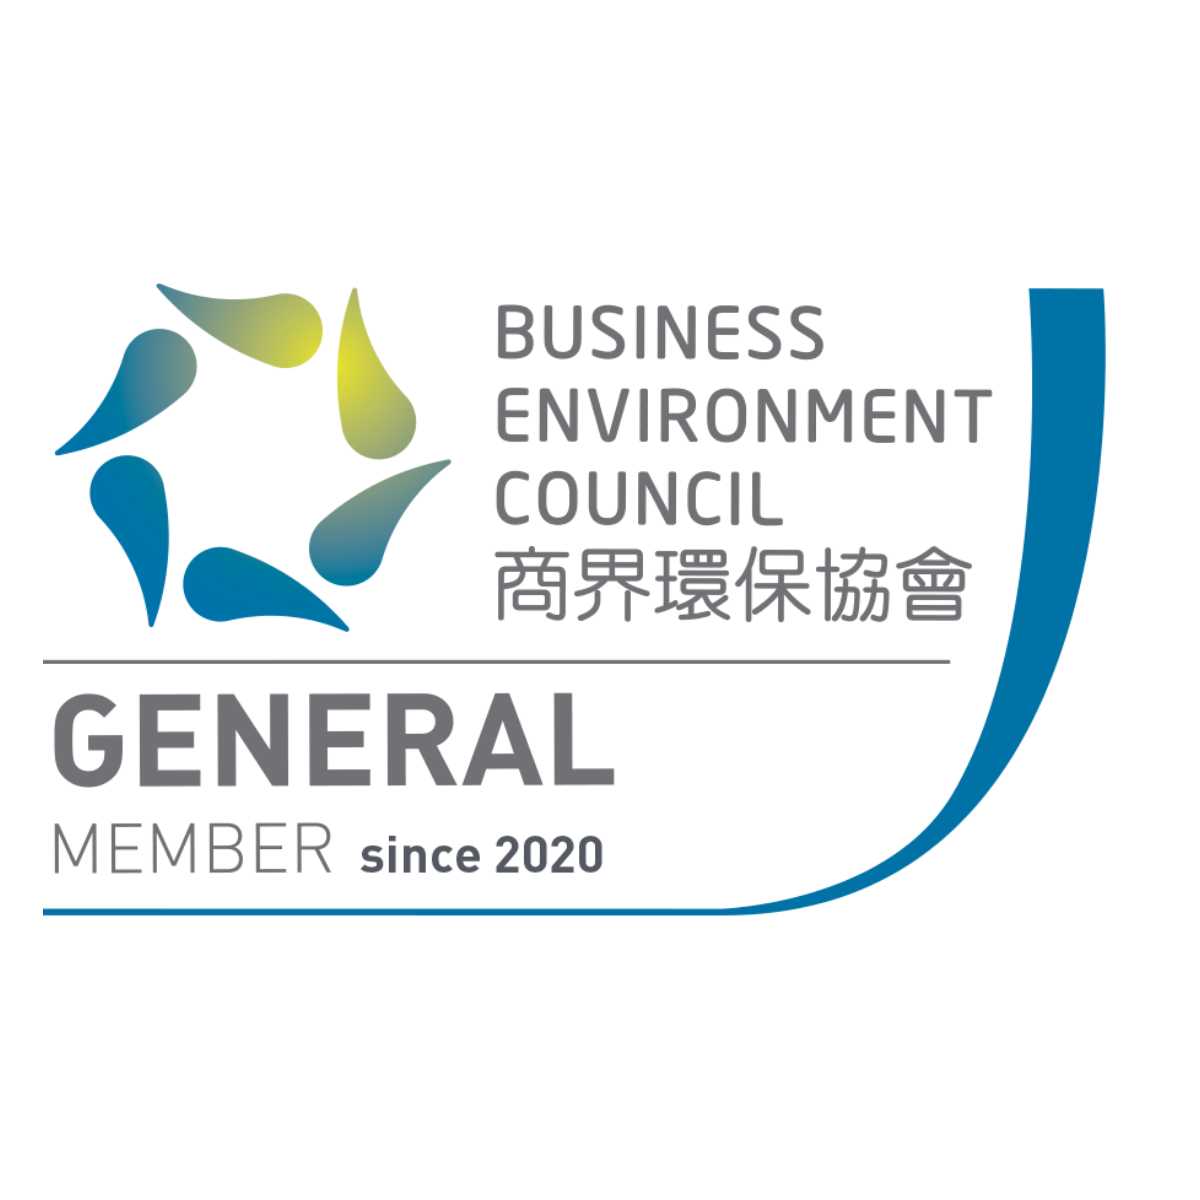 Business Environment Council